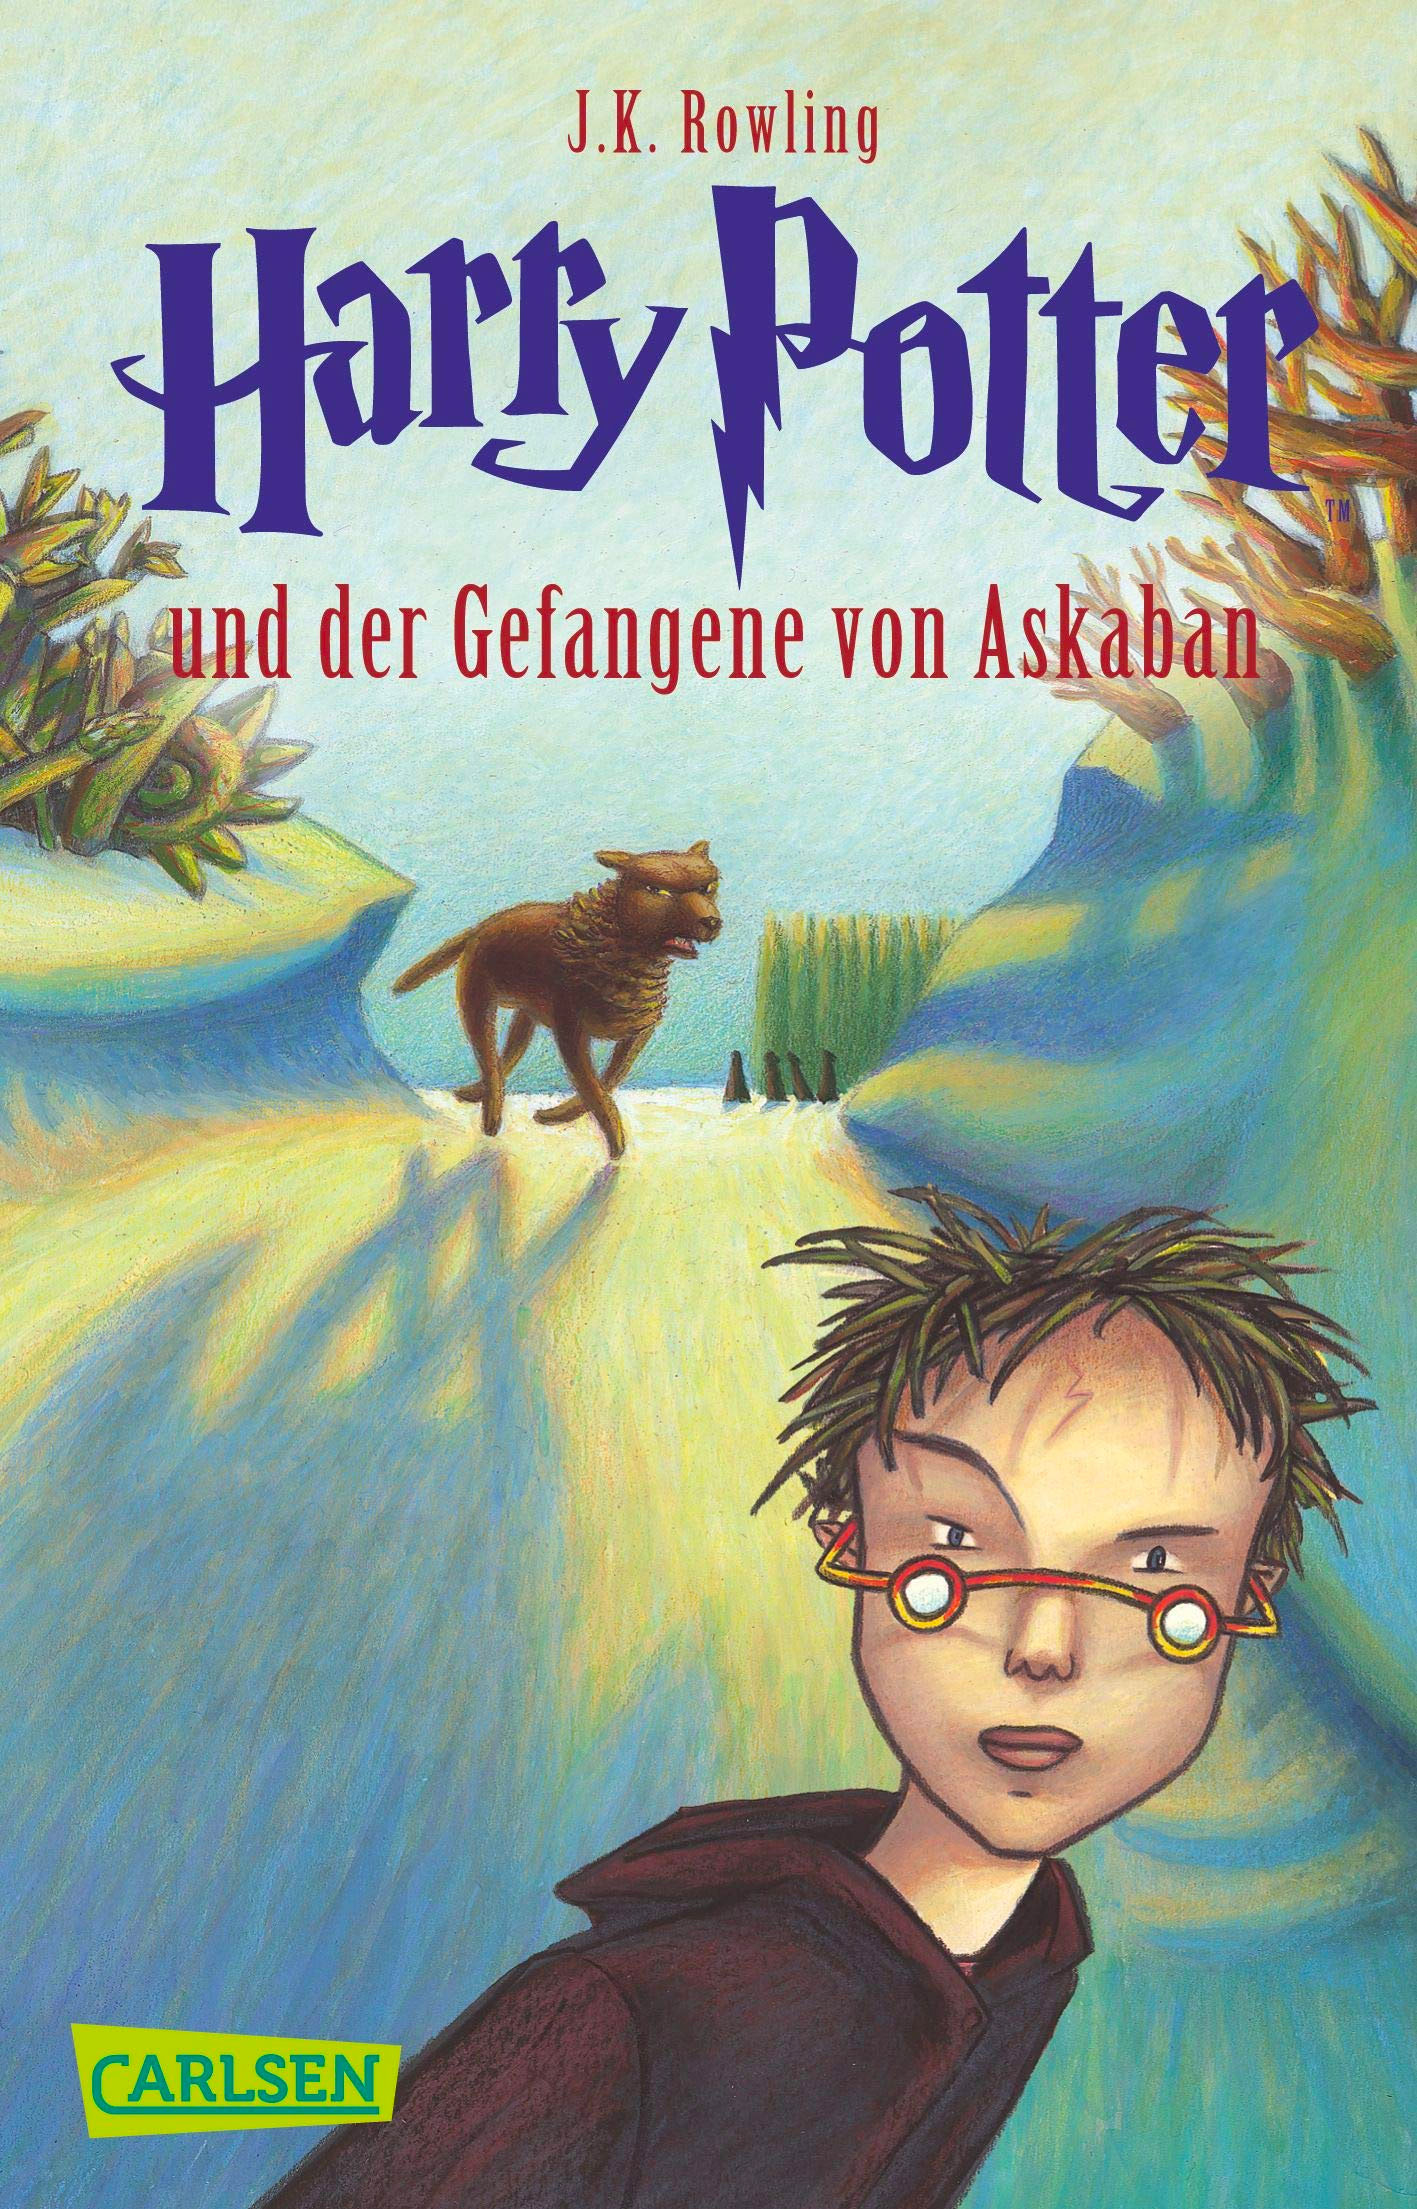 ‘Prisoner of Azkaban’ German edition